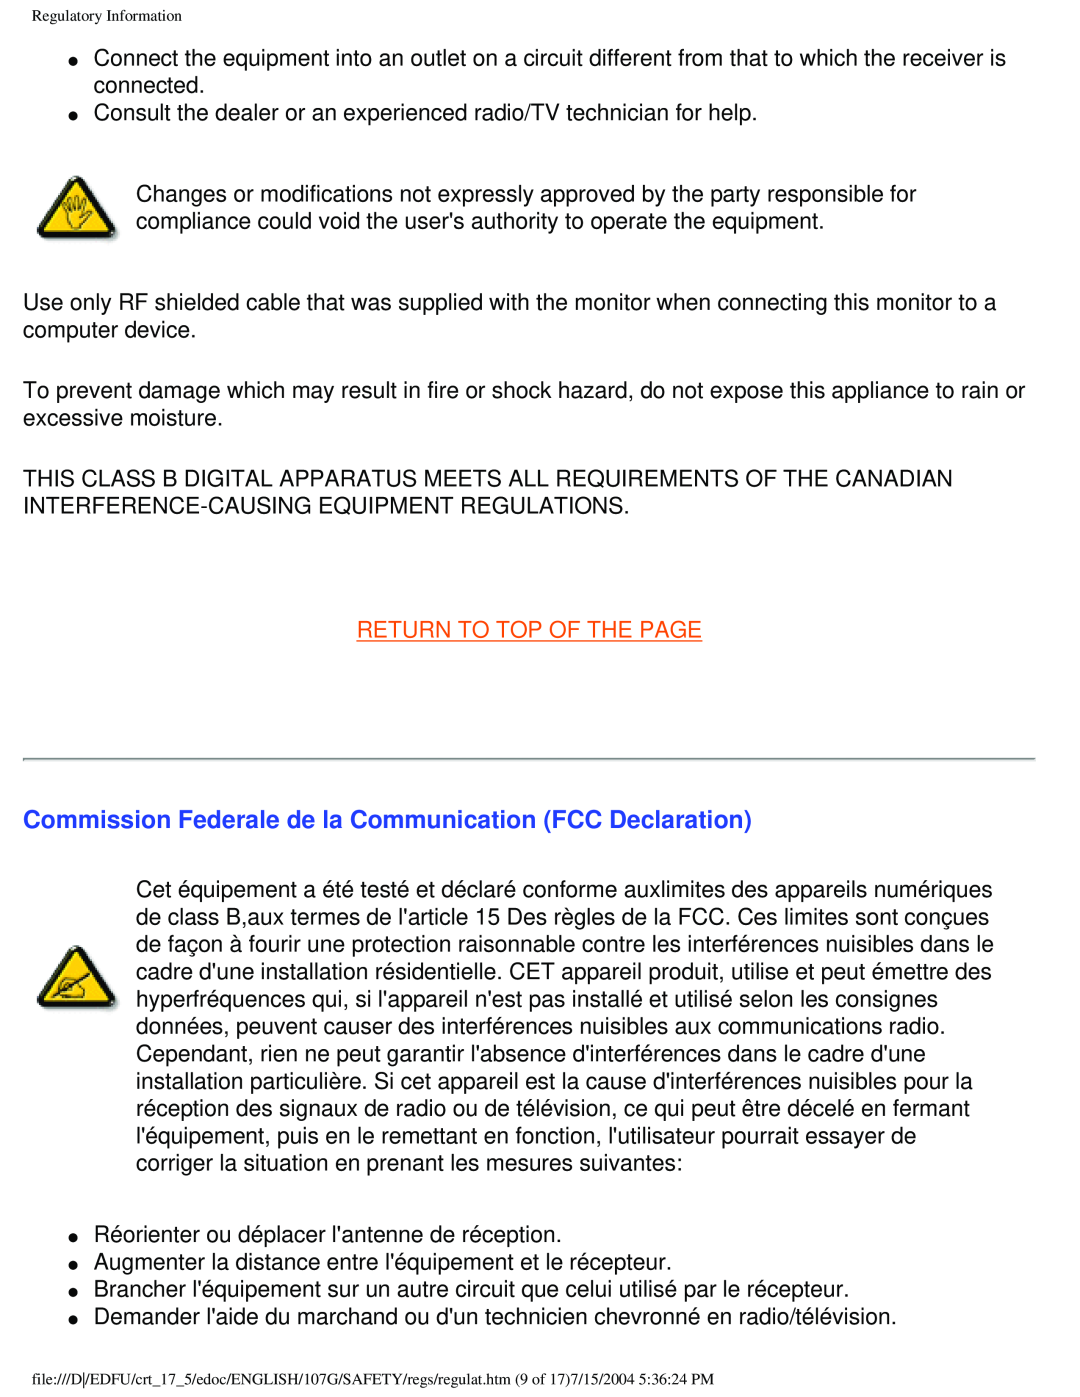 Philips 107G user manual Commission Federale de la Communication FCC Declaration, Return To Top Of The Page 